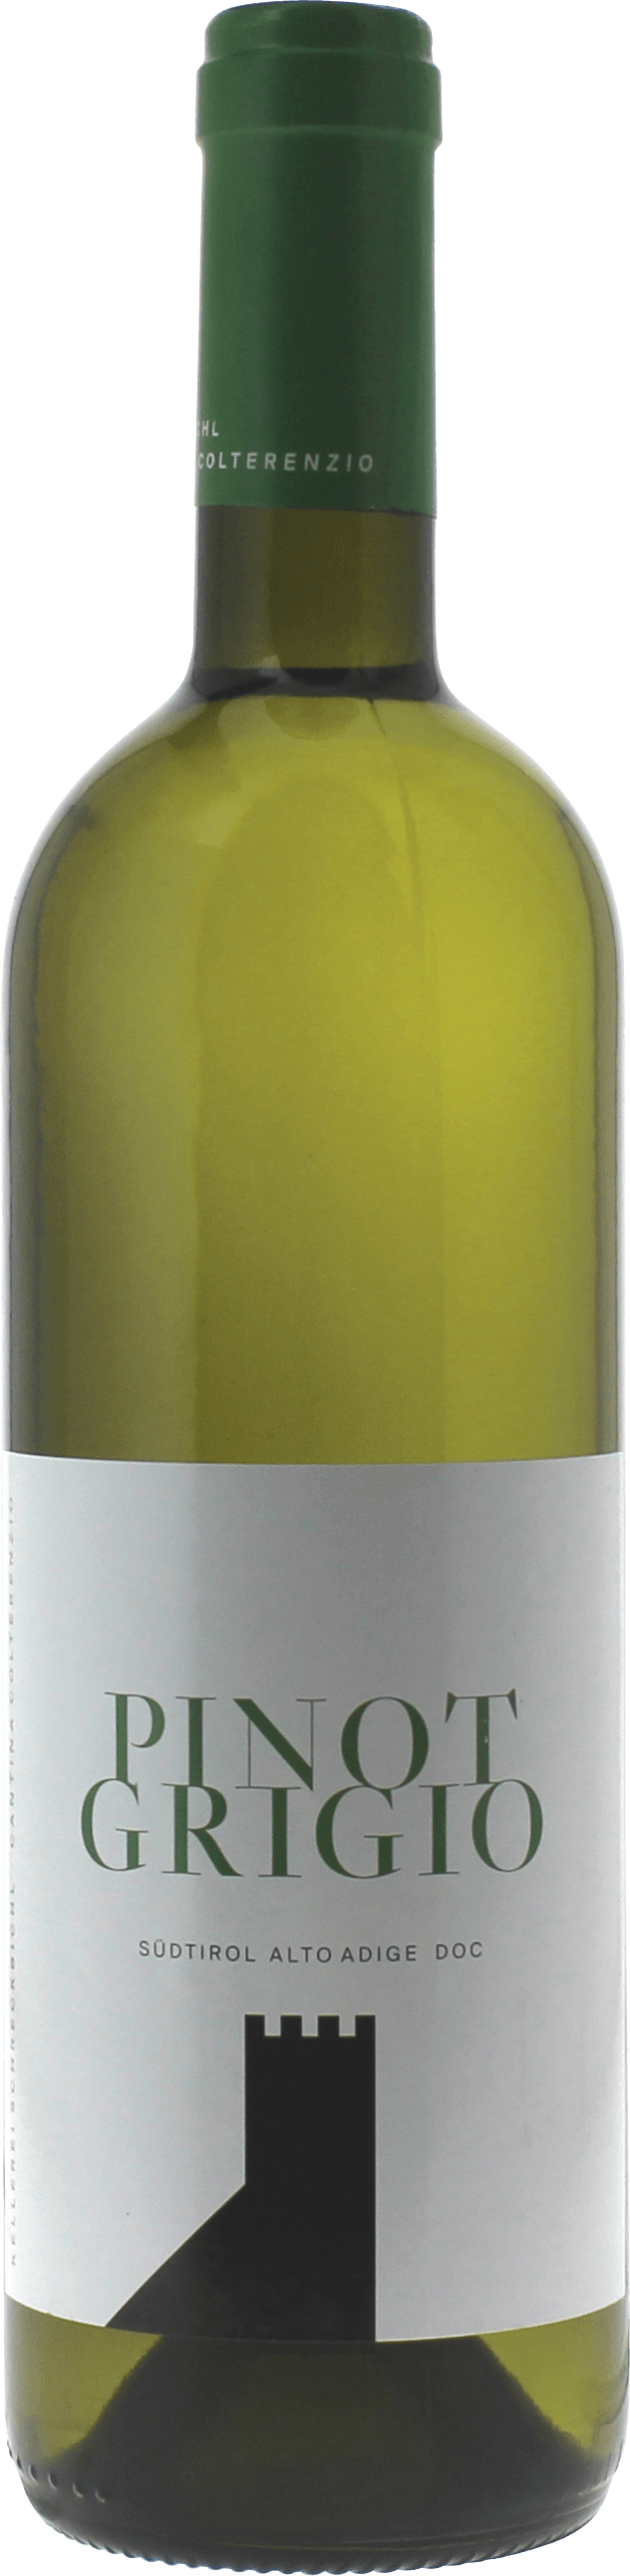 Colterenzio - classic pinot grigio - sudtirol alto adige 2018  , Vin italien